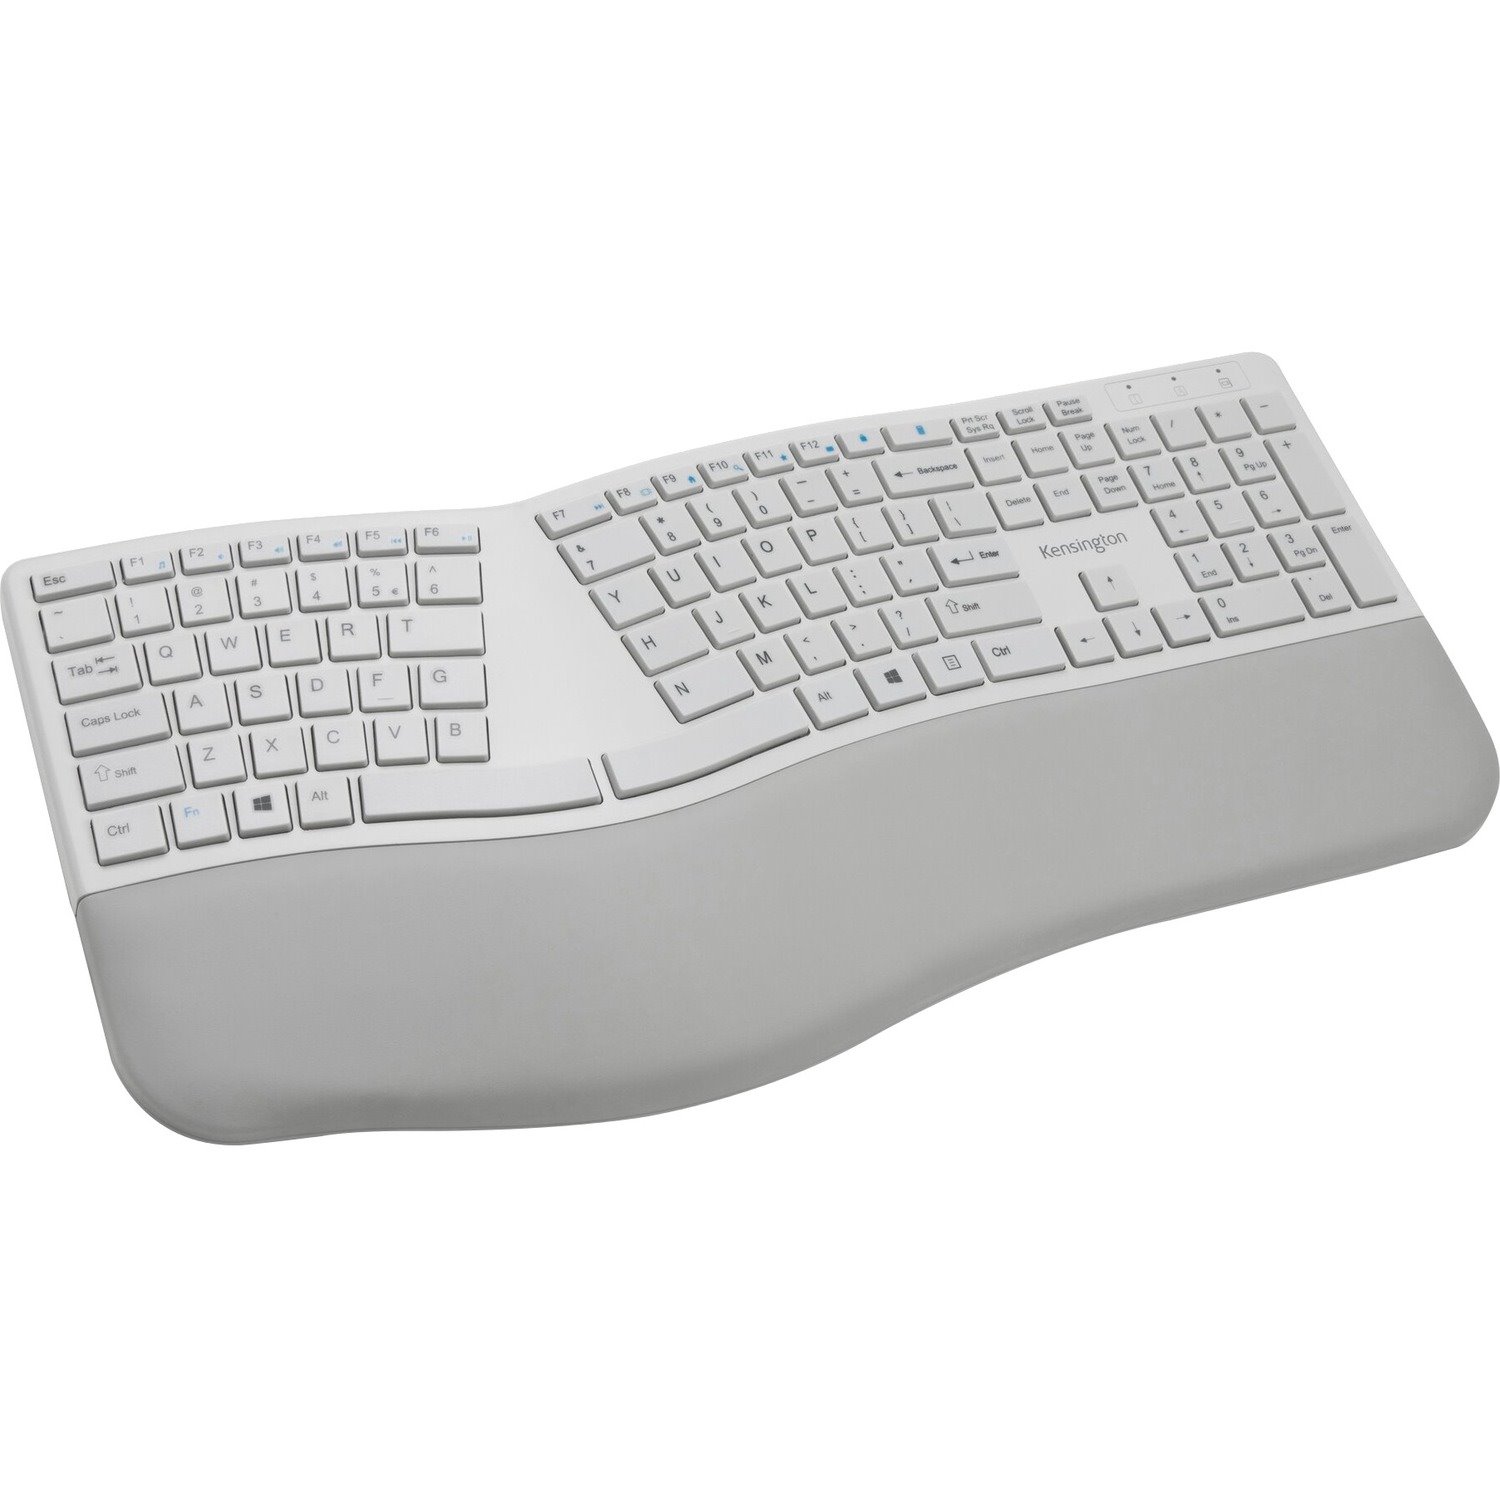 Kensington Pro Fit Keyboard - Wireless Connectivity - USB Interface - Grey